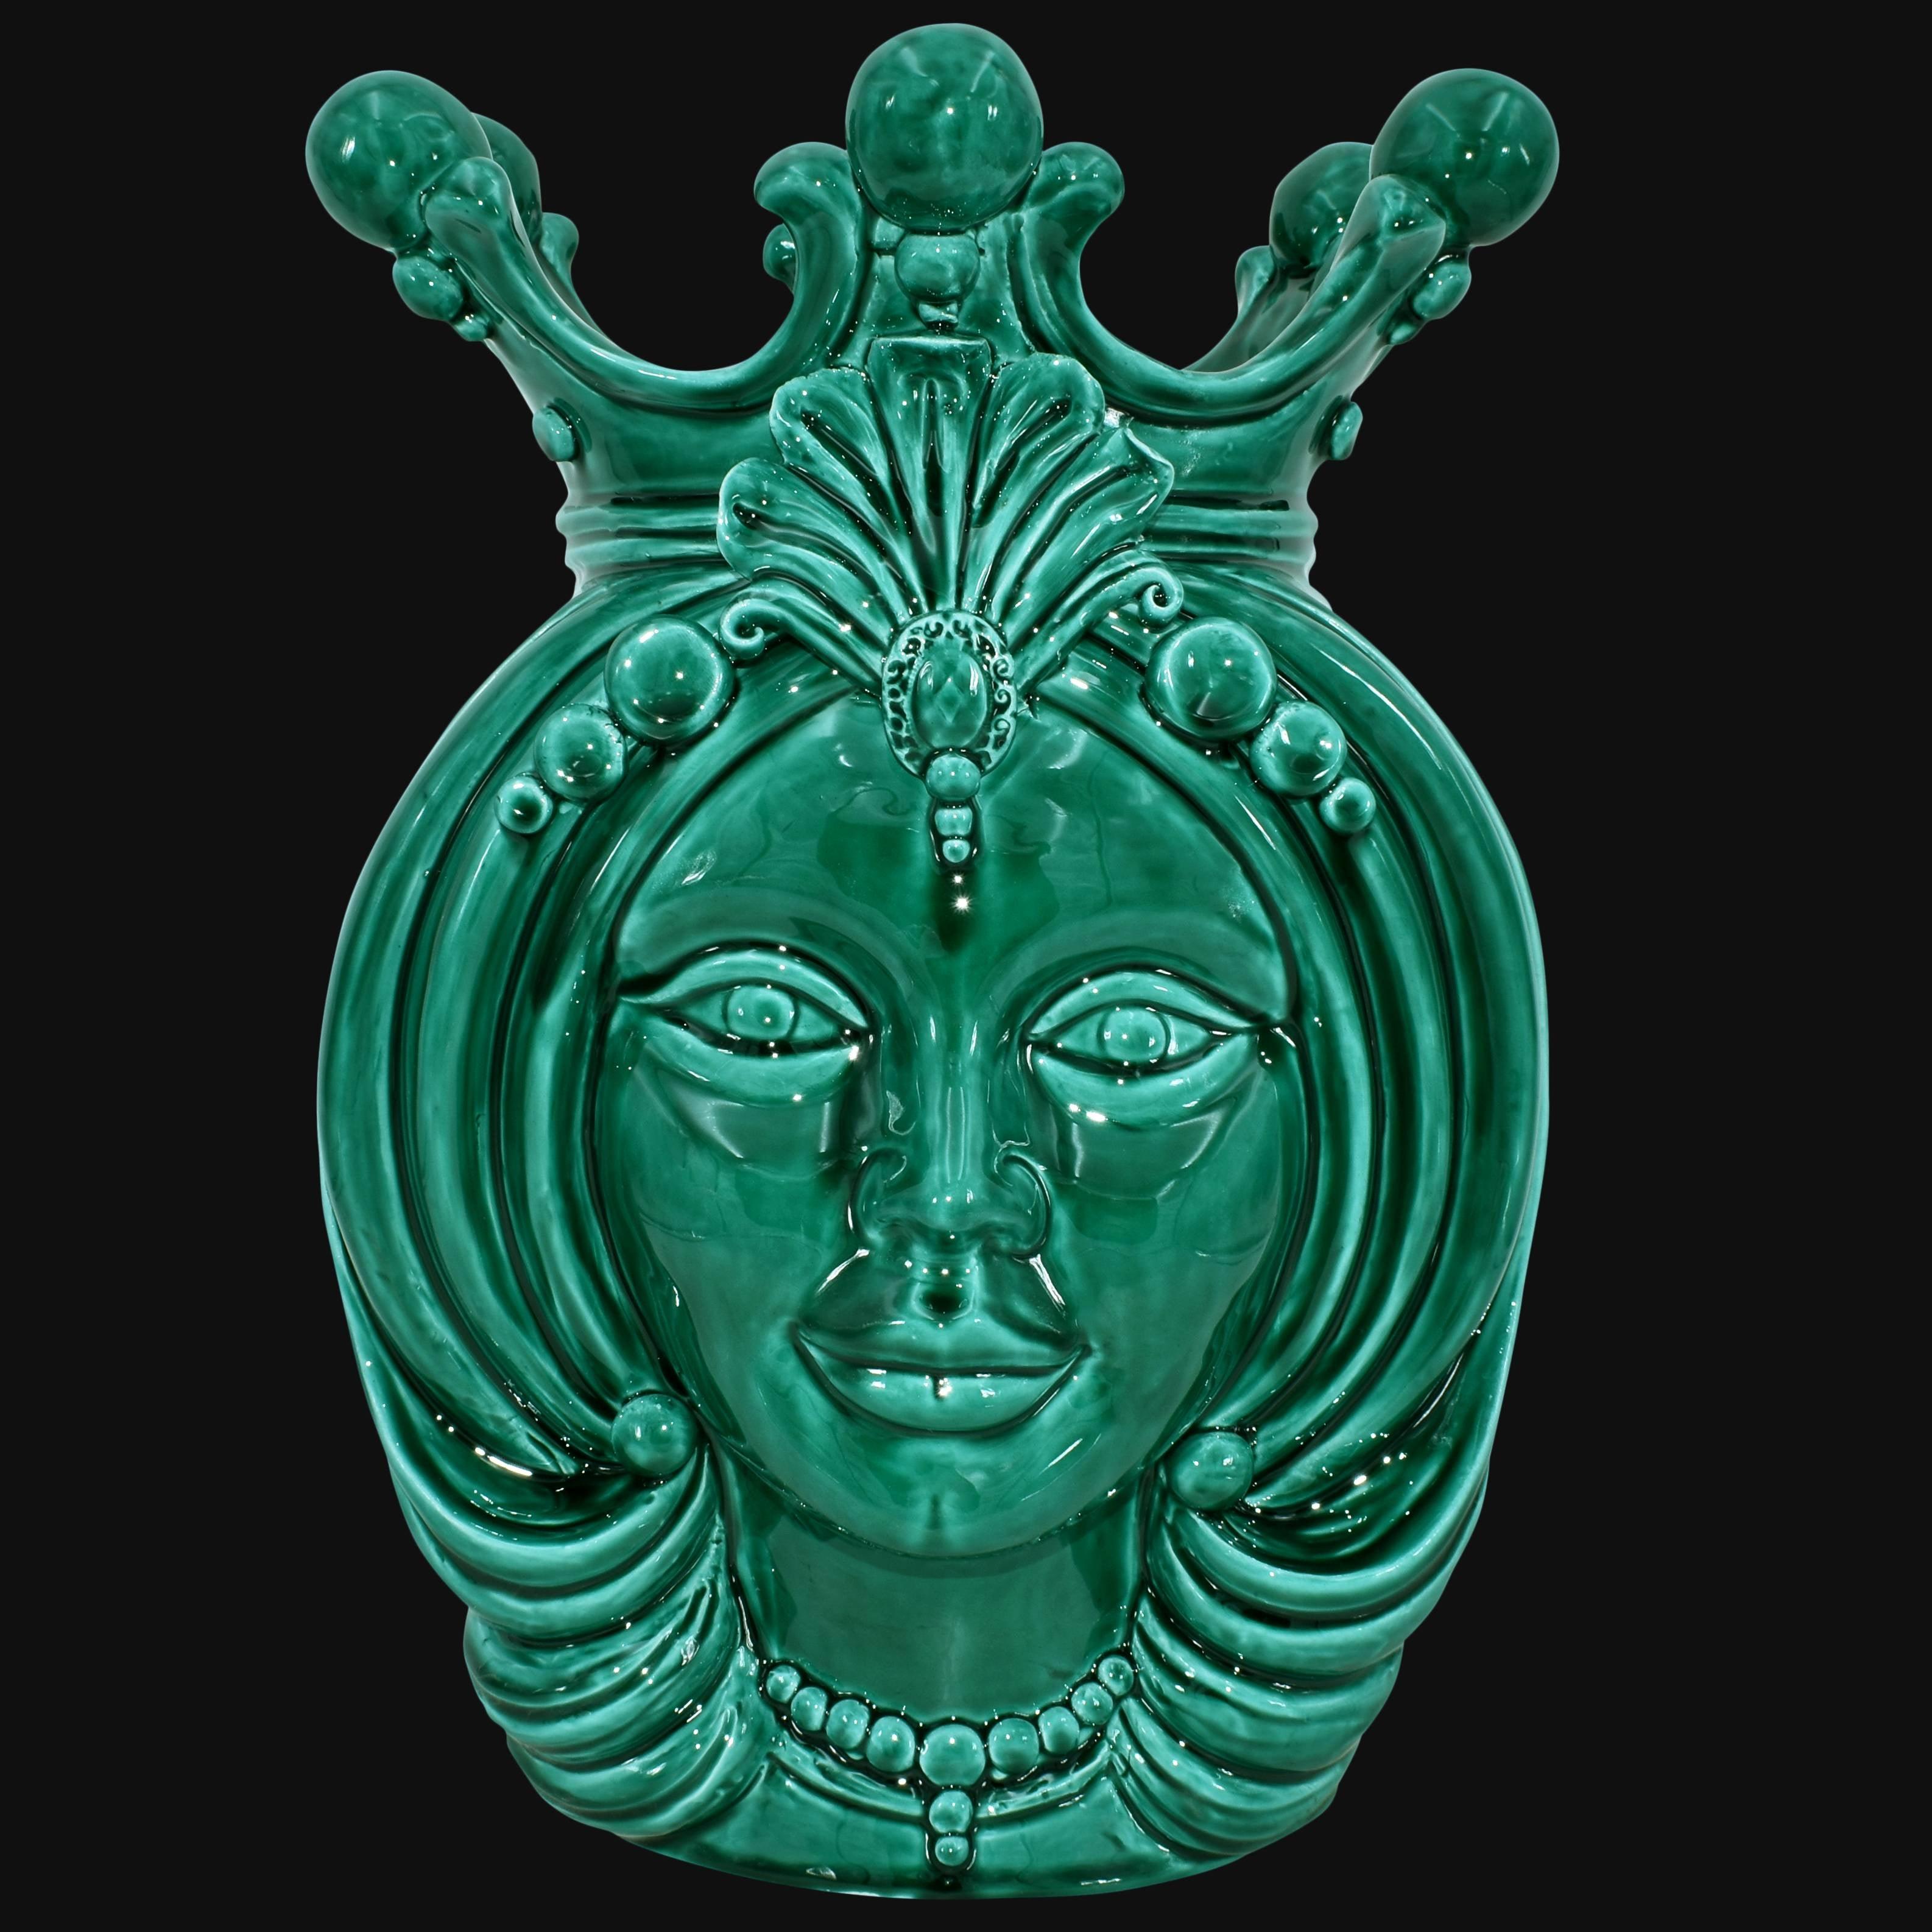 Testa h 38 liscia Verde Smeraldo femmina - Ceramiche di Caltagirone Sofia